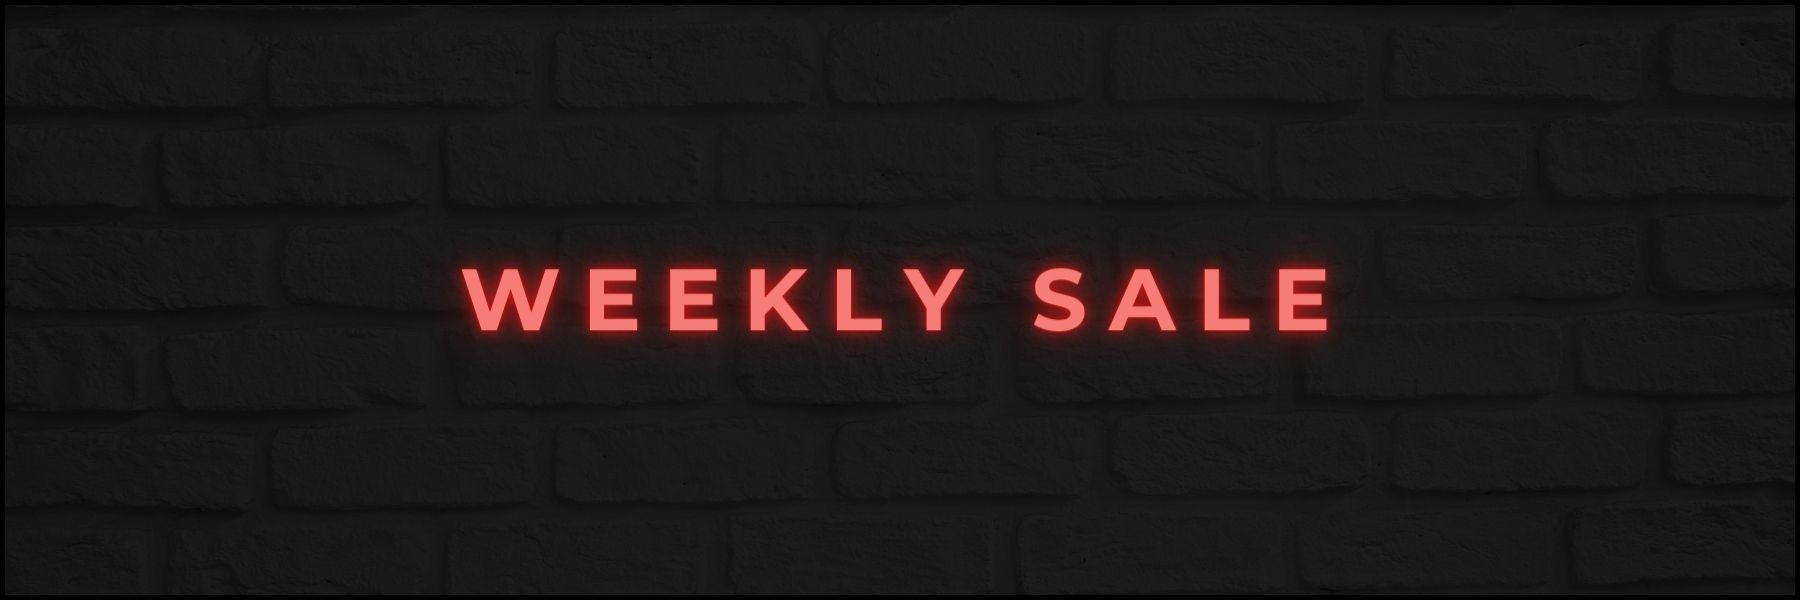 Weekly Sales Rotation - ON SLICE